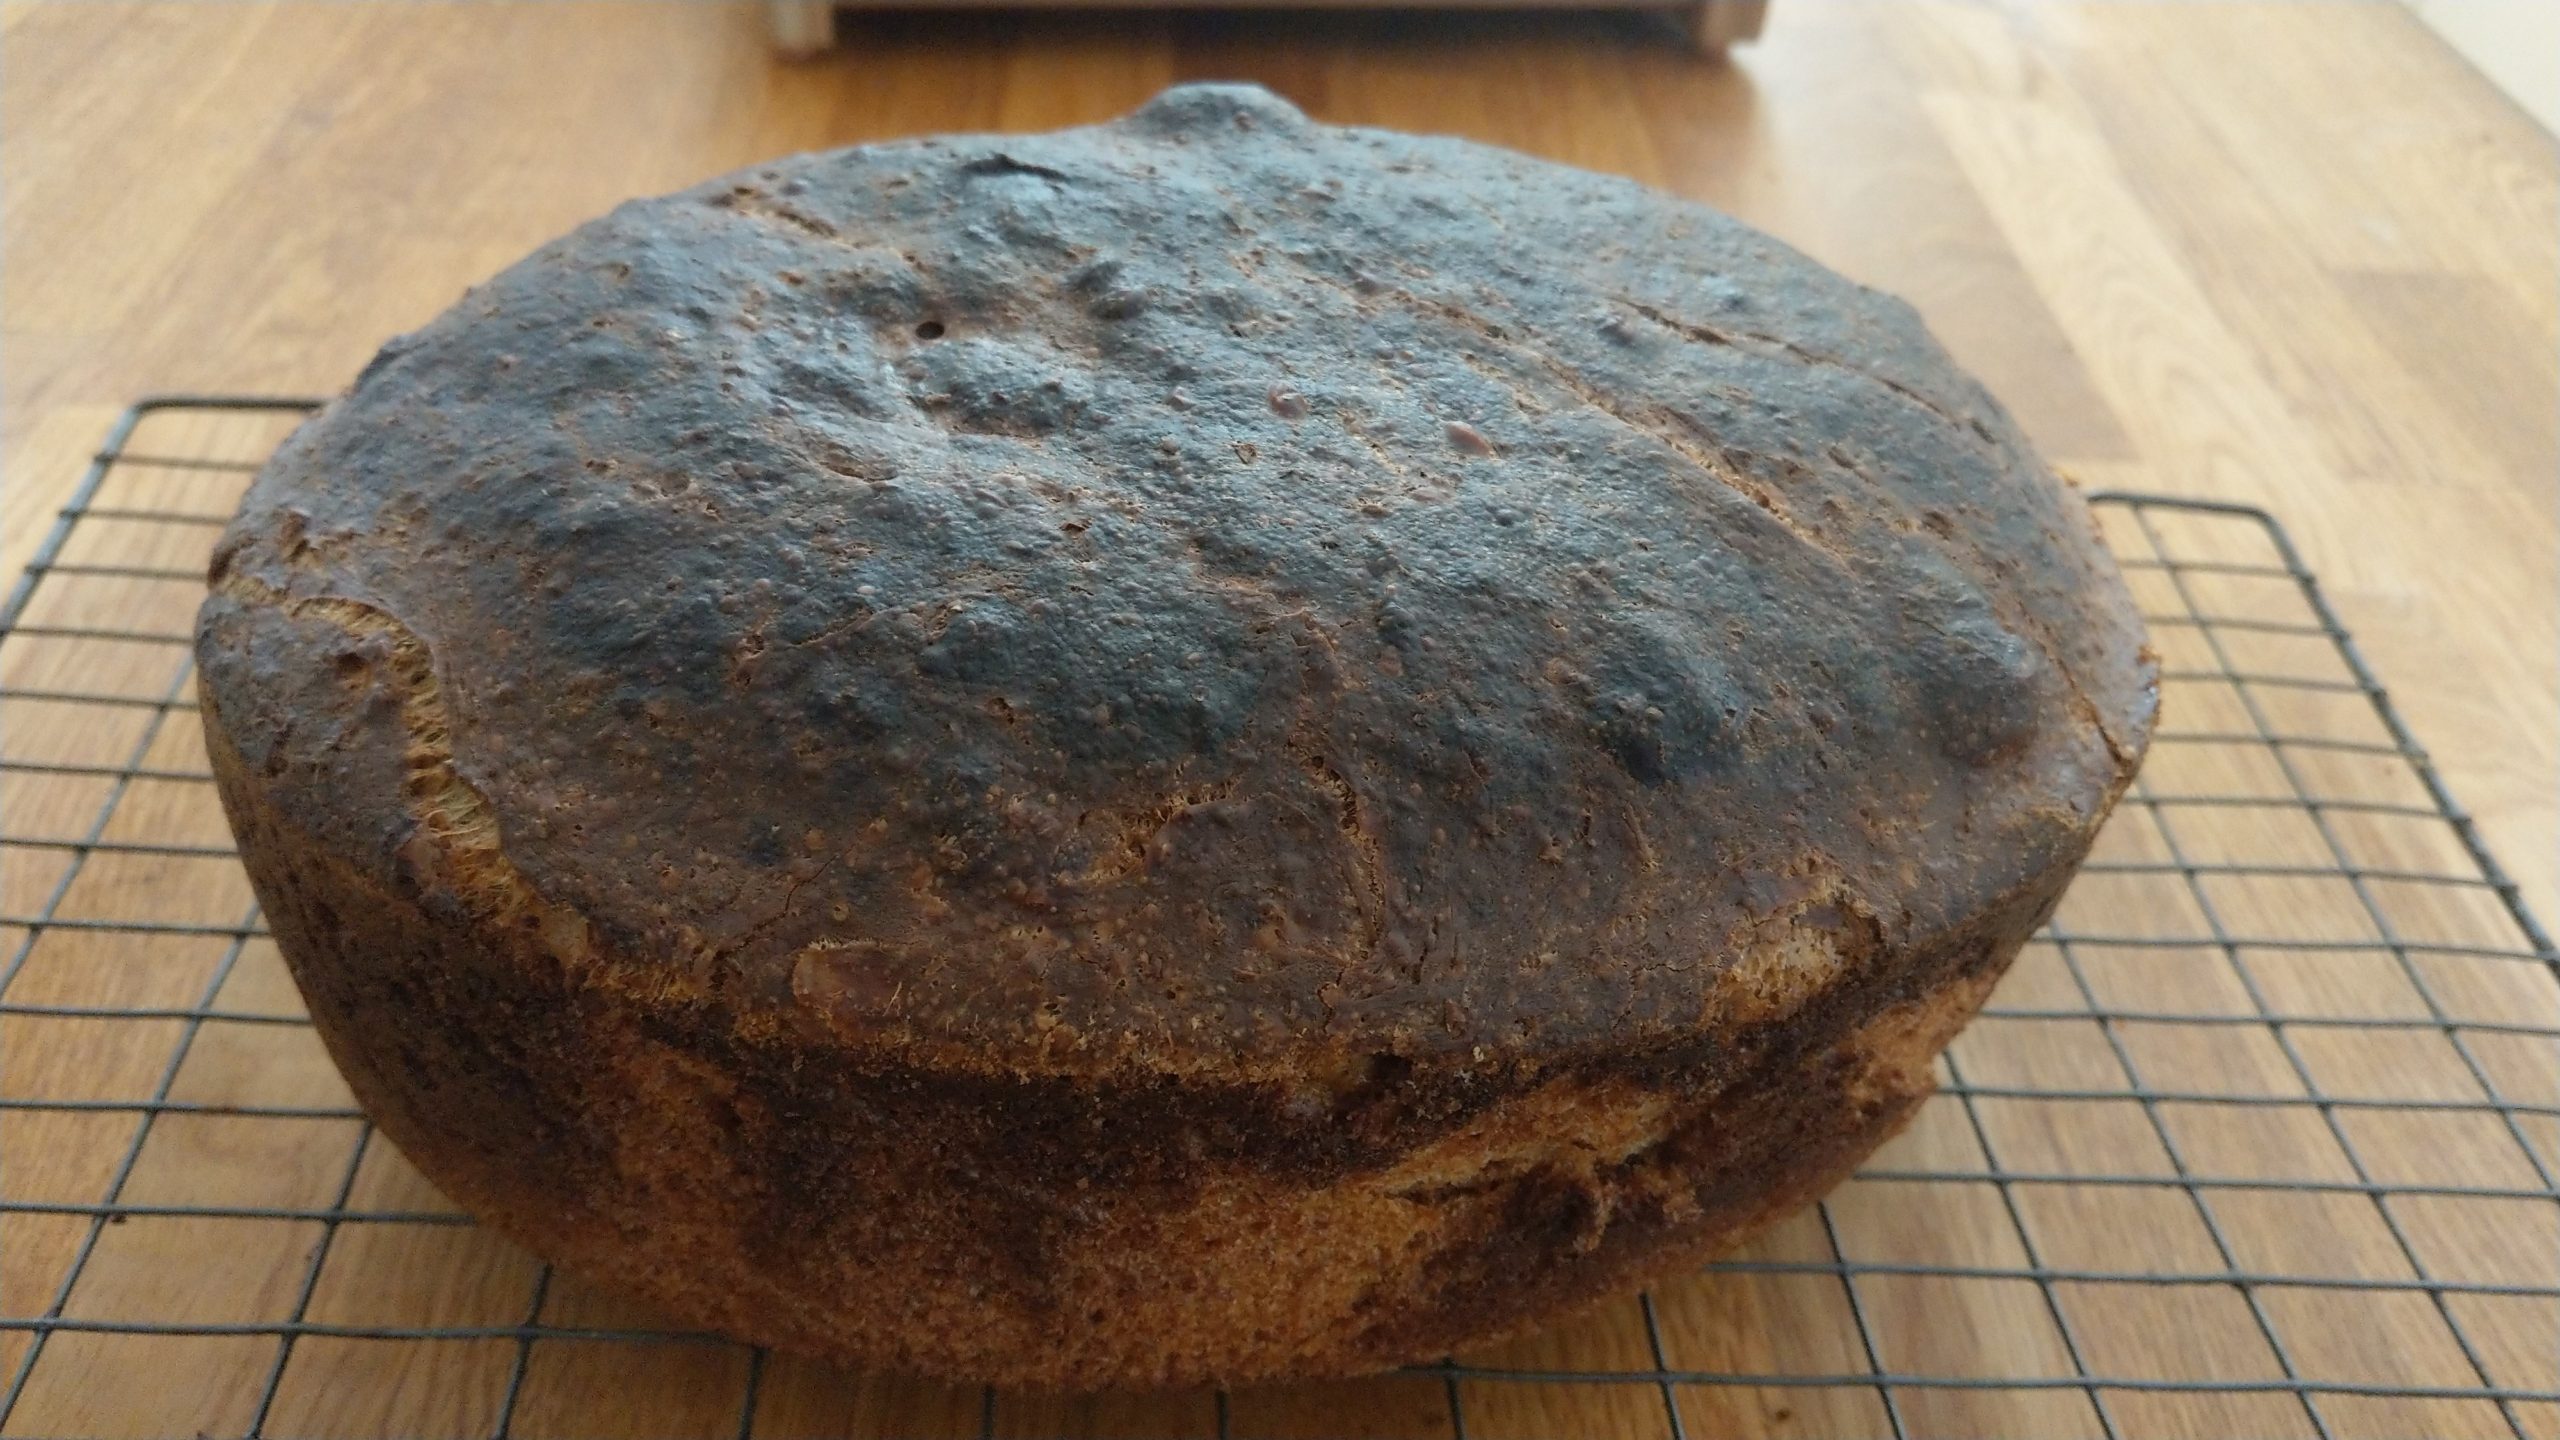 The finished loaf